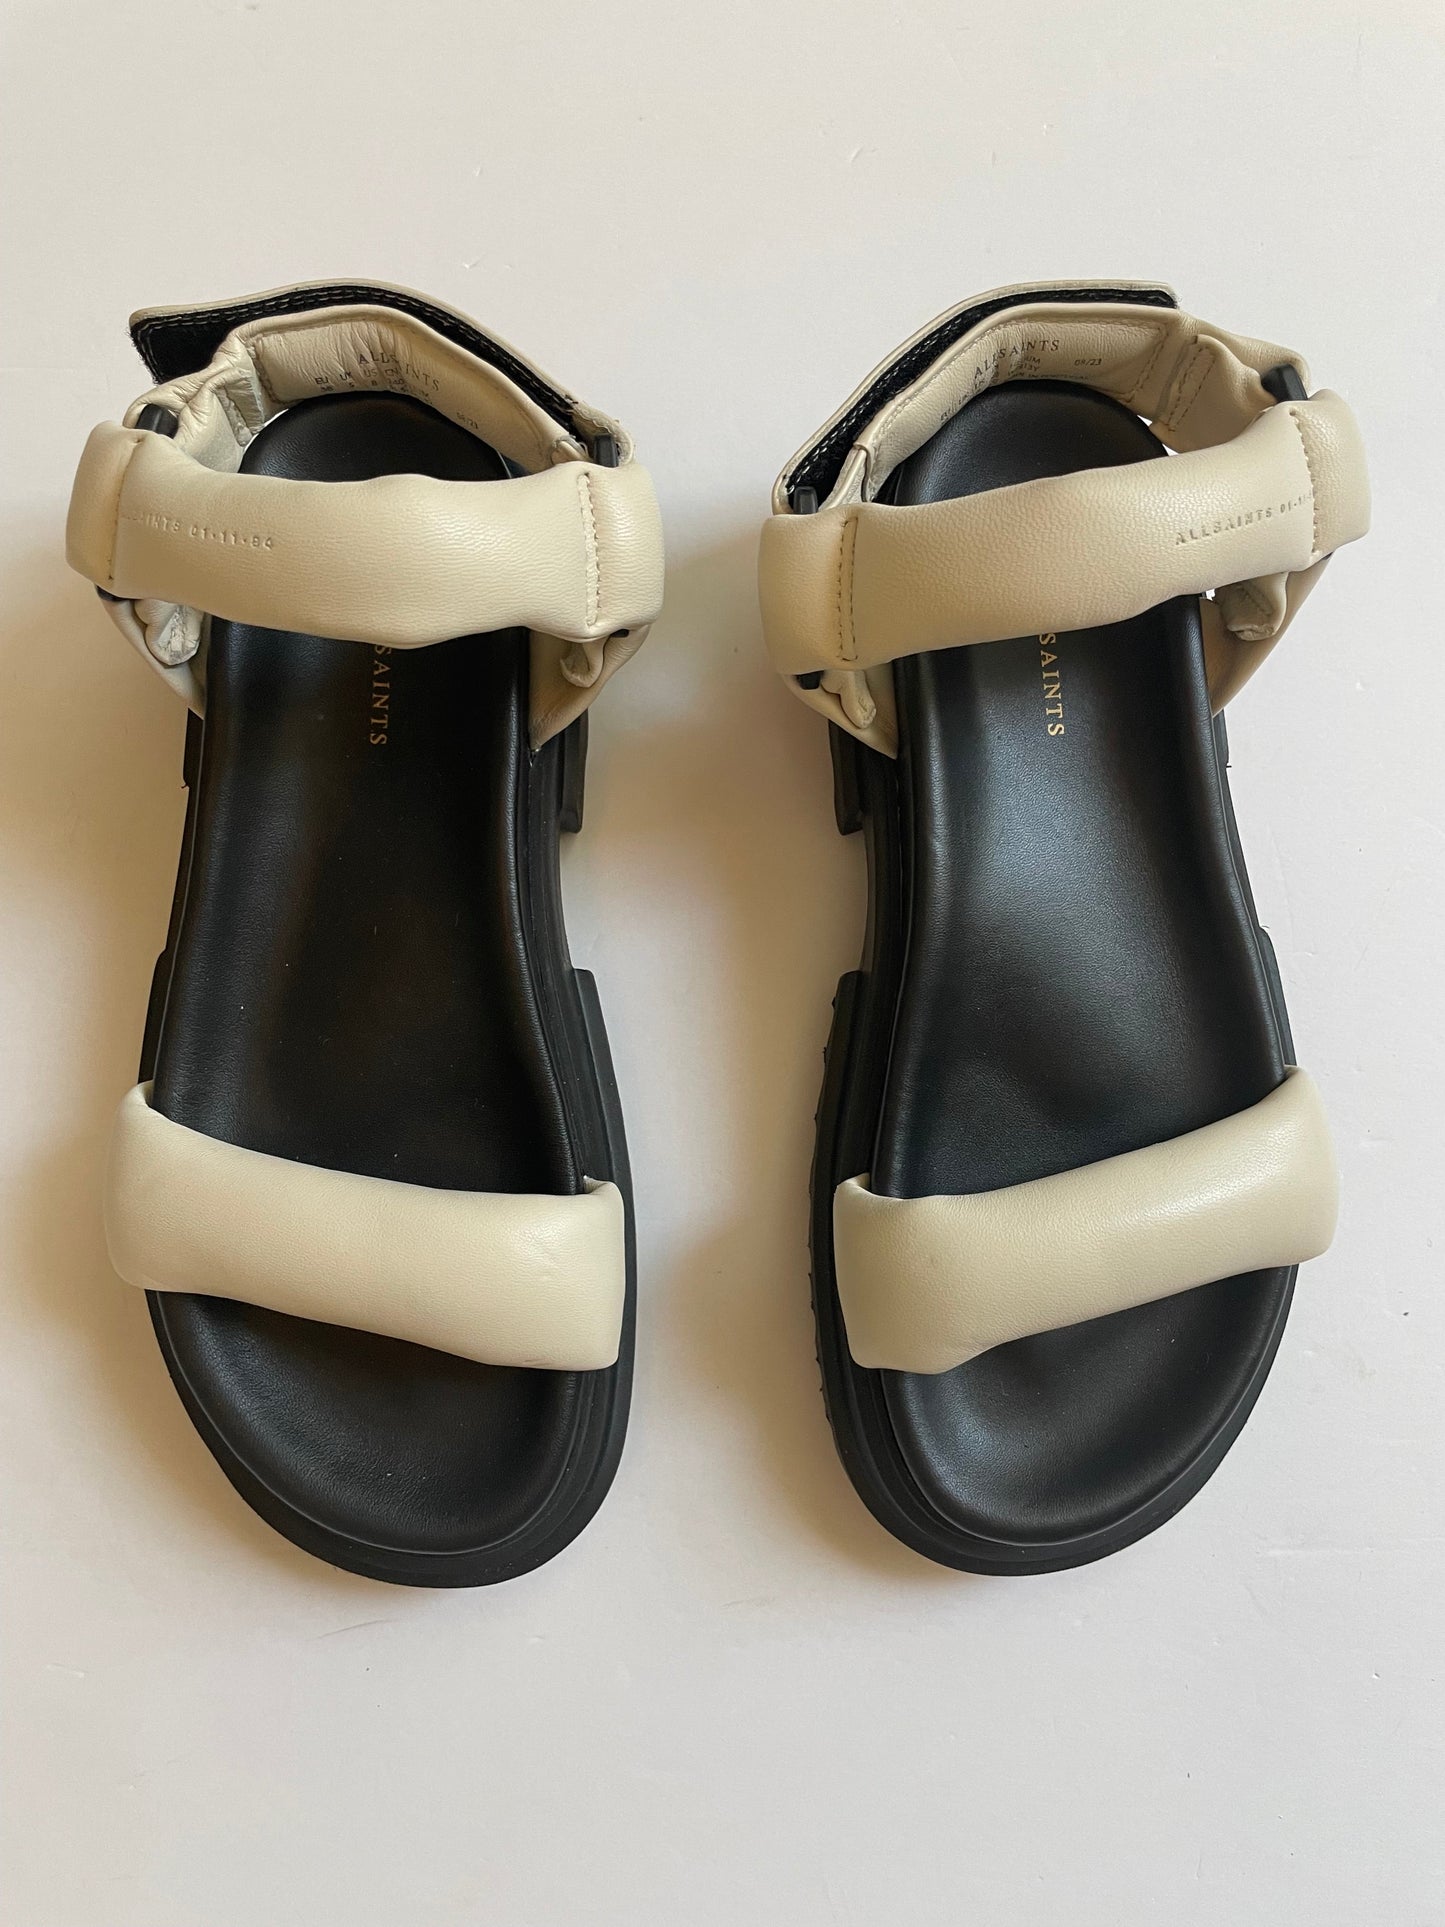 Cream Sandals Heels Platform All Saints, Size 8